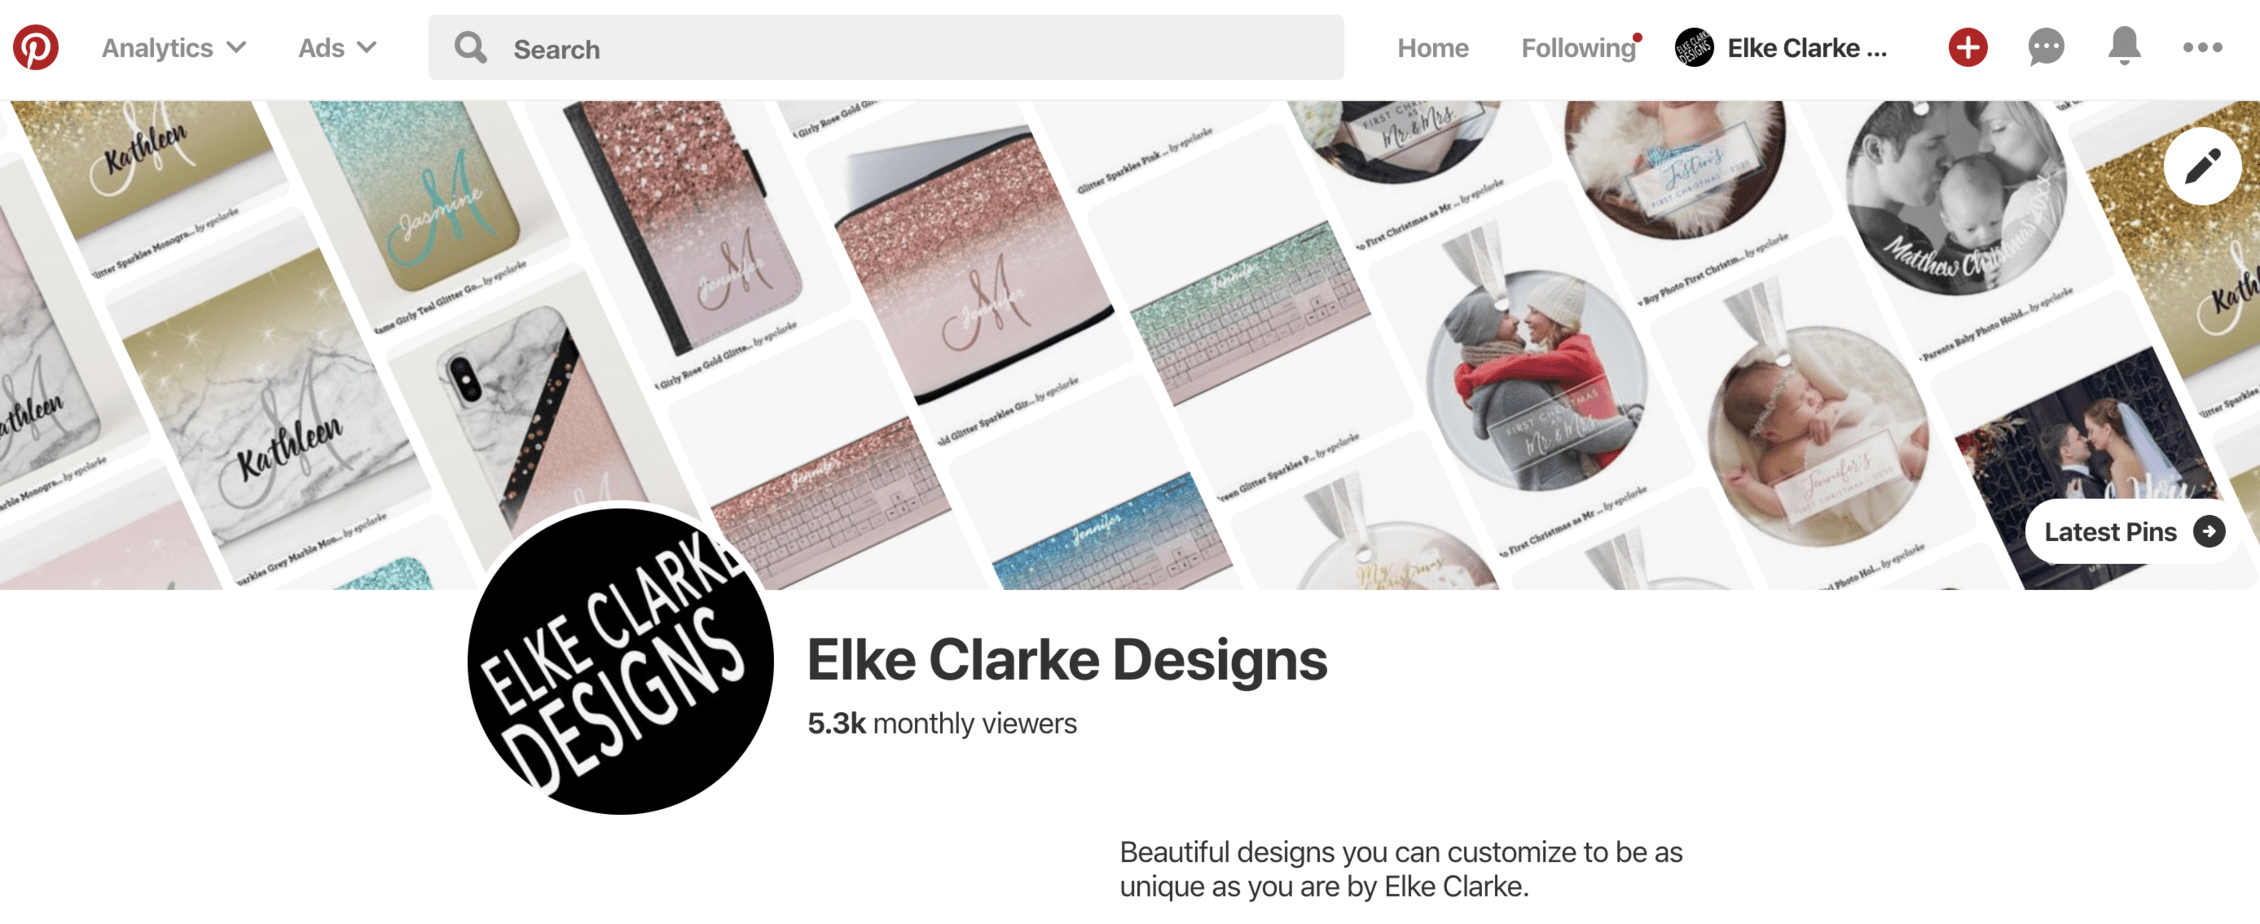 Elke Clarke Designs Pinterest Account